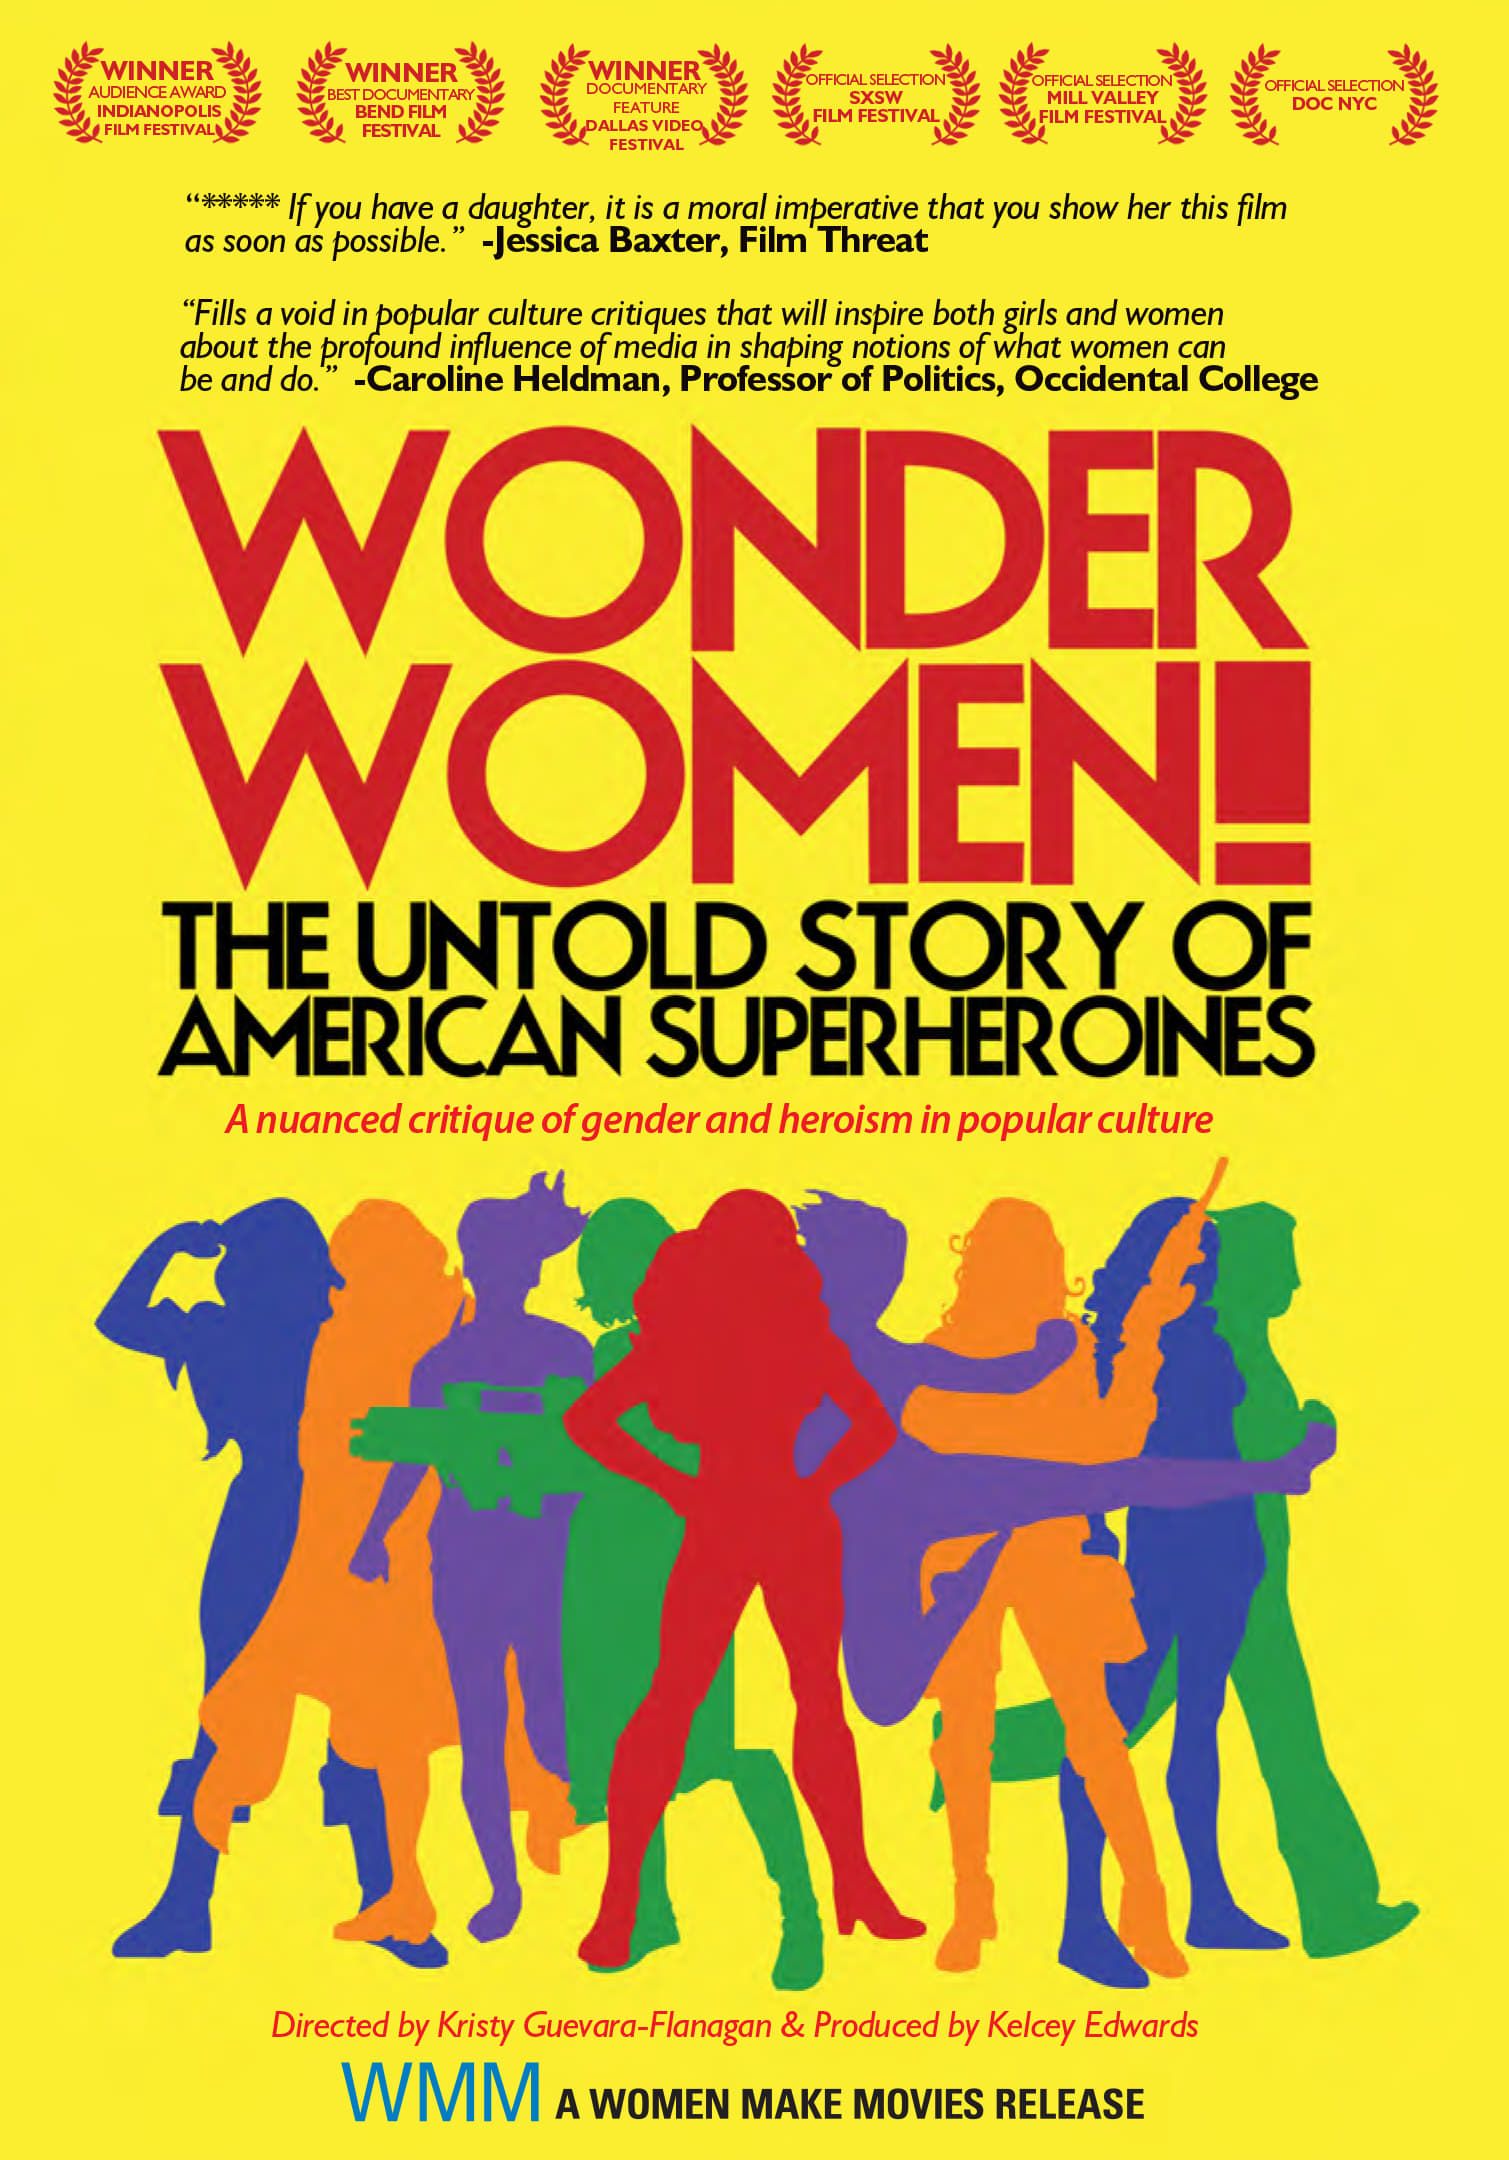 Wonder Women! the Untold Story of American Superheroines